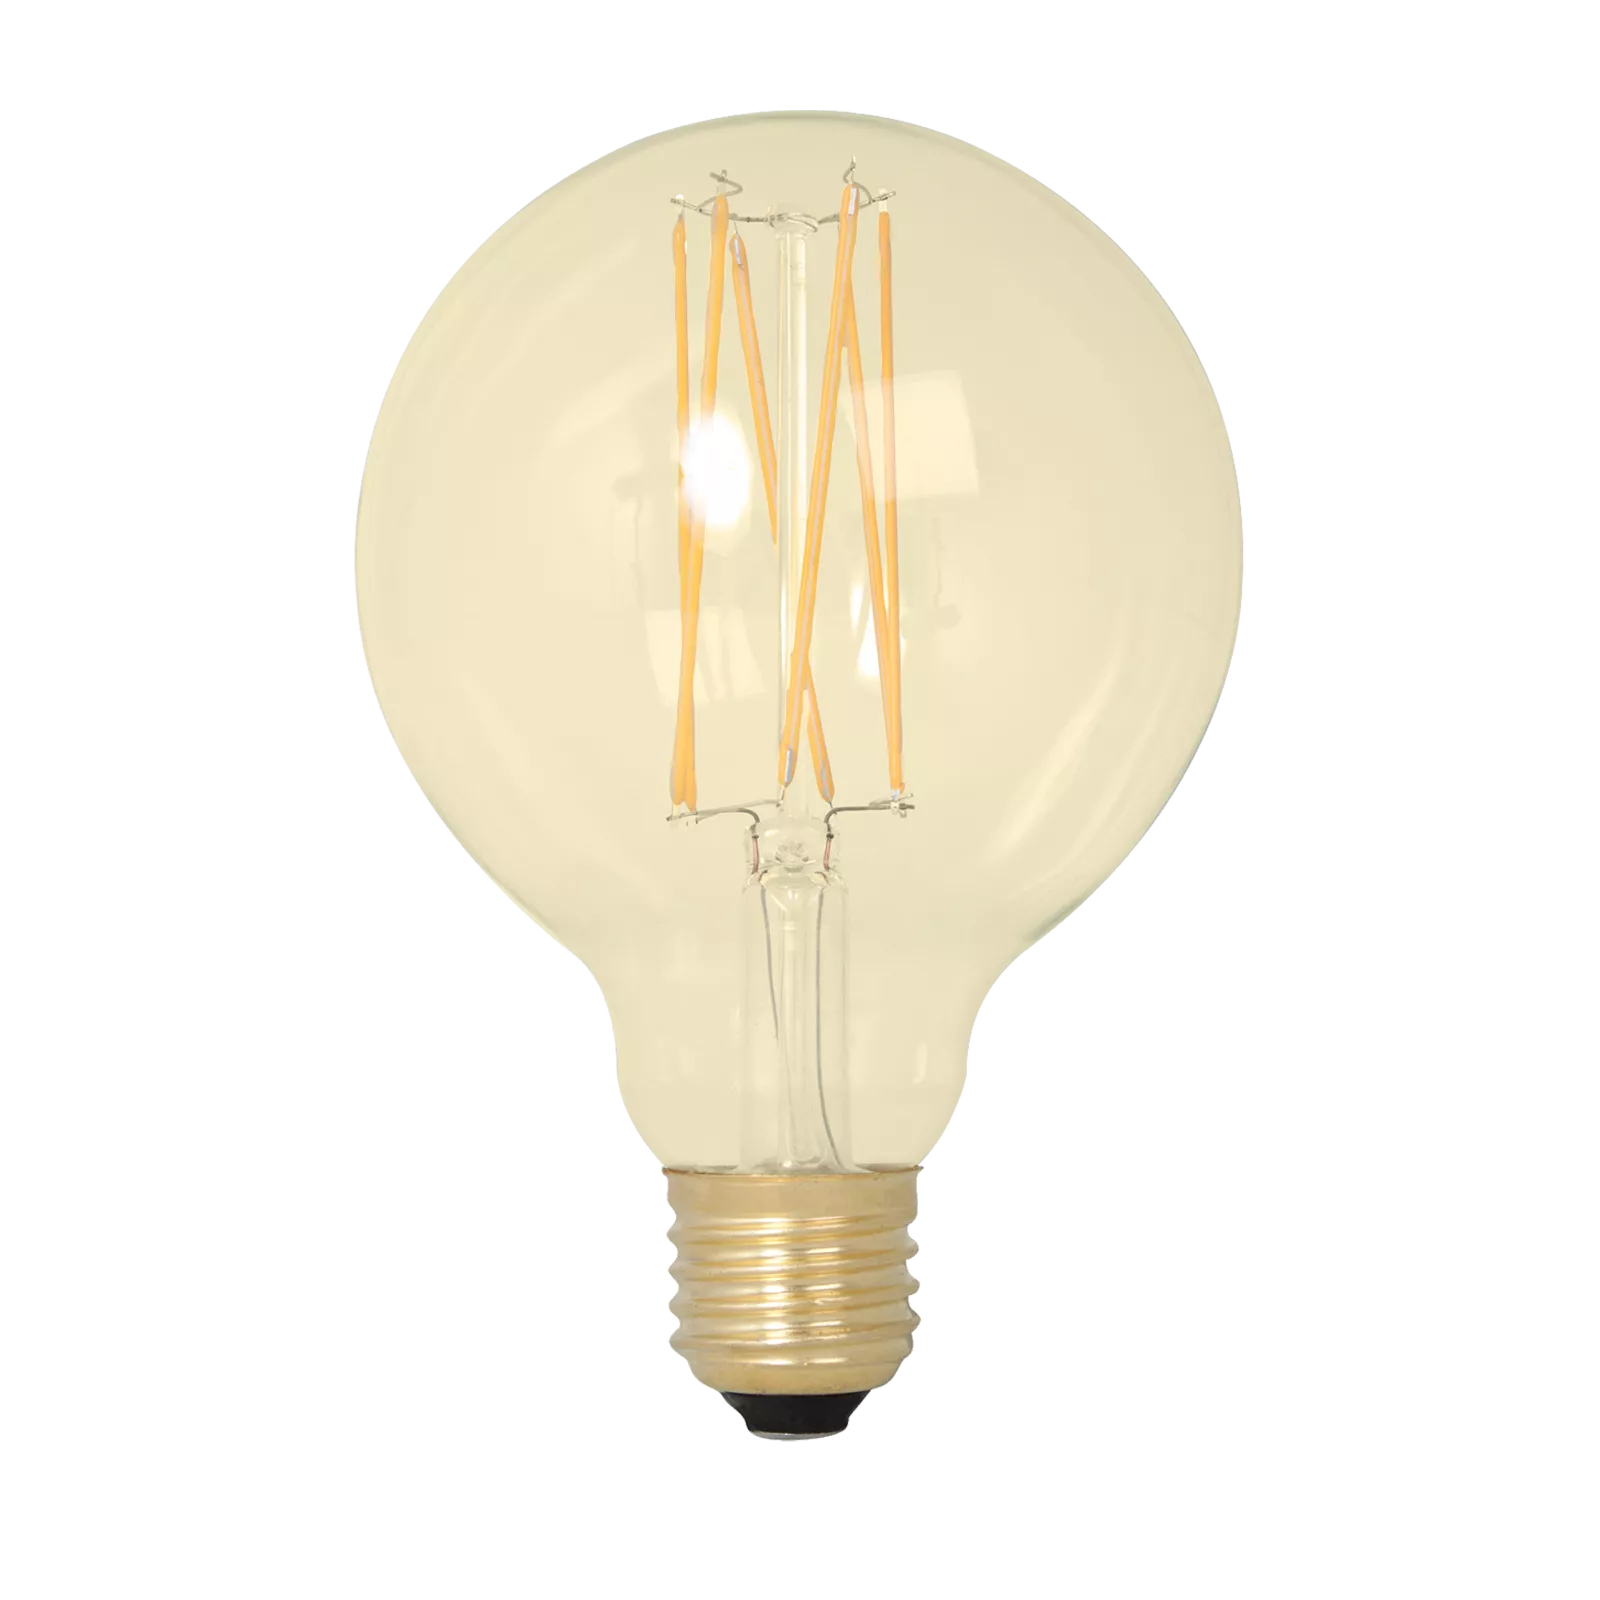 LED lamp (95x140mm) Globe - Gold